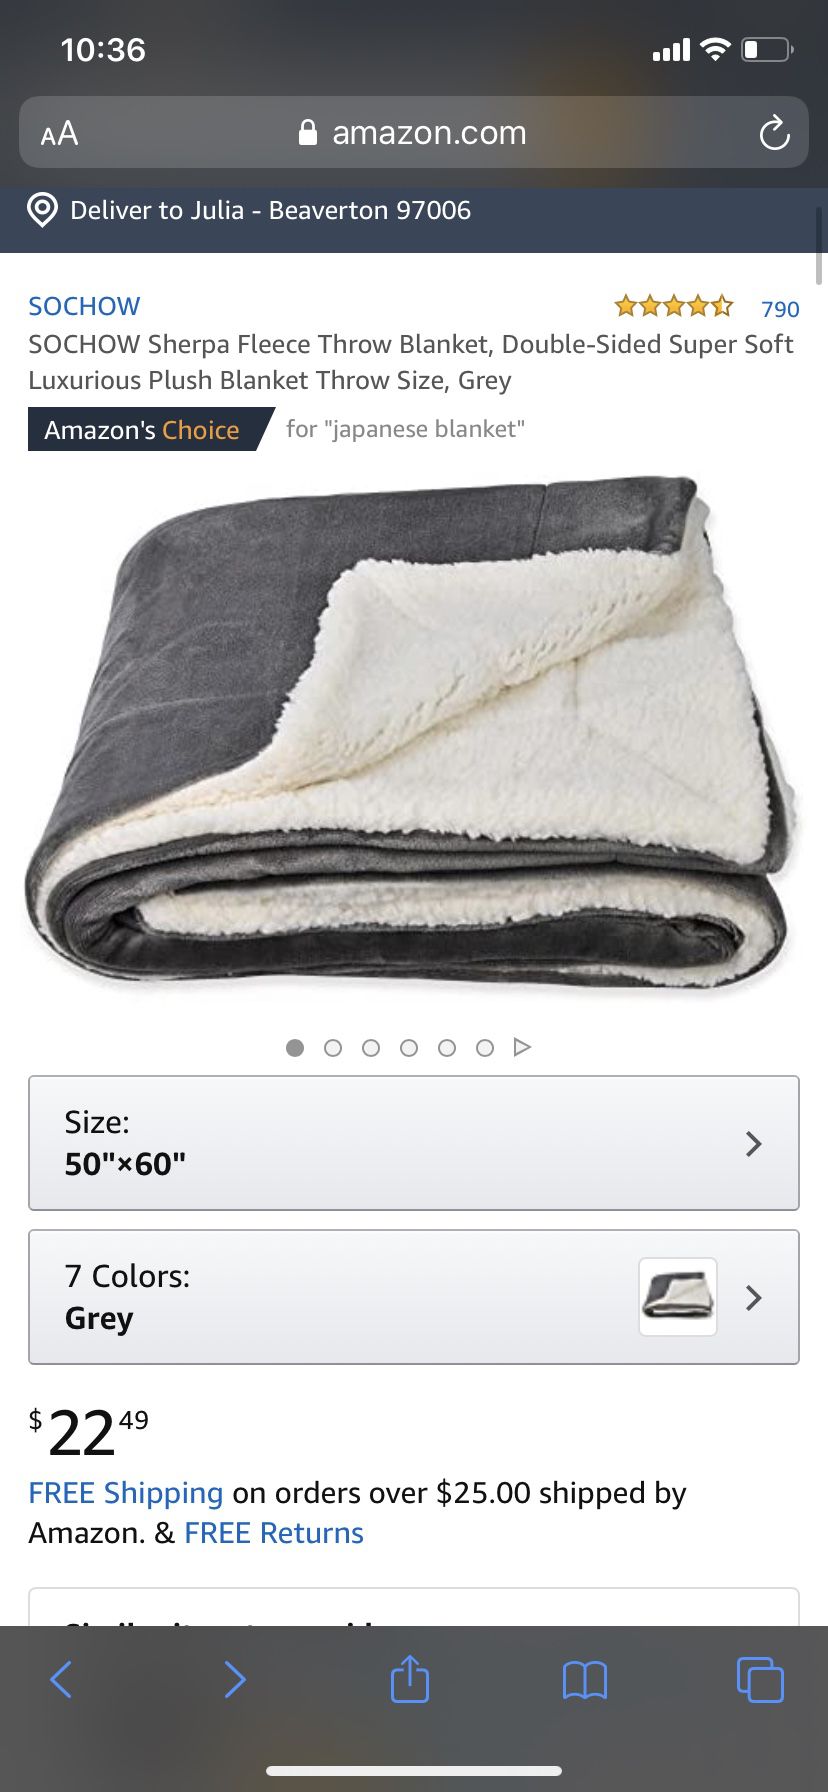 NEW 50 x 60 SOCHOW Sherpa Fleece Throw Blanket, Double-Sided Super Soft Luxurious Plush Blanket Throw Size, Grey